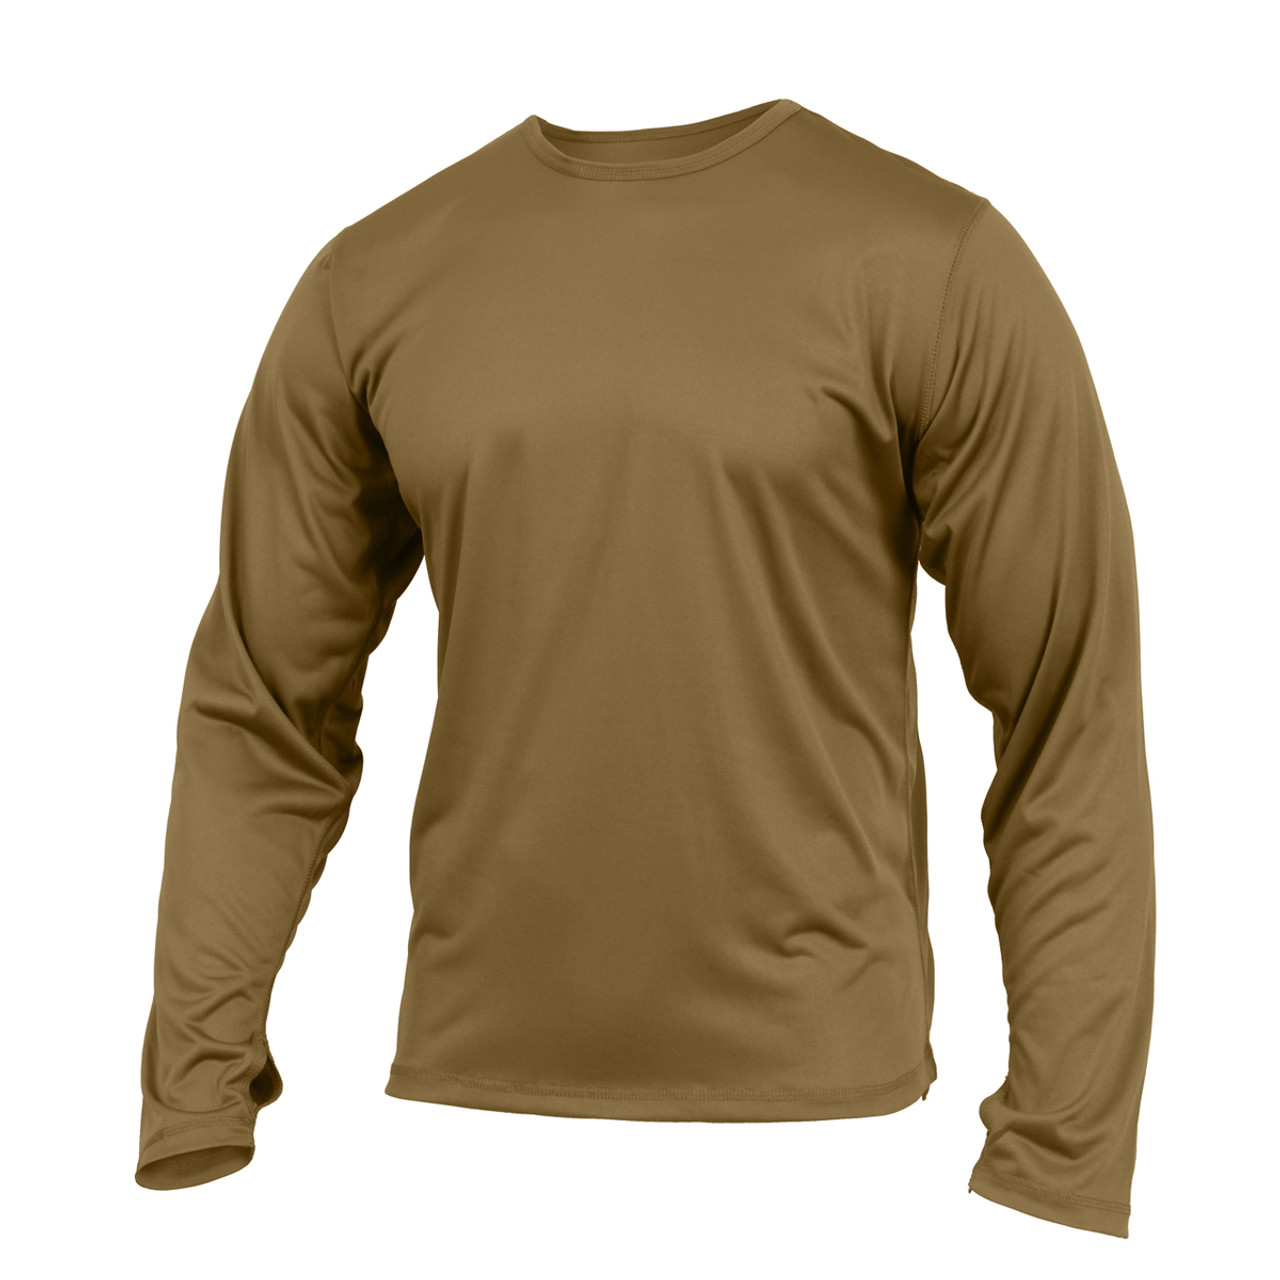 Shop GEN III Silk Weight Underwear Tops - Fatigues Army Navy Gear